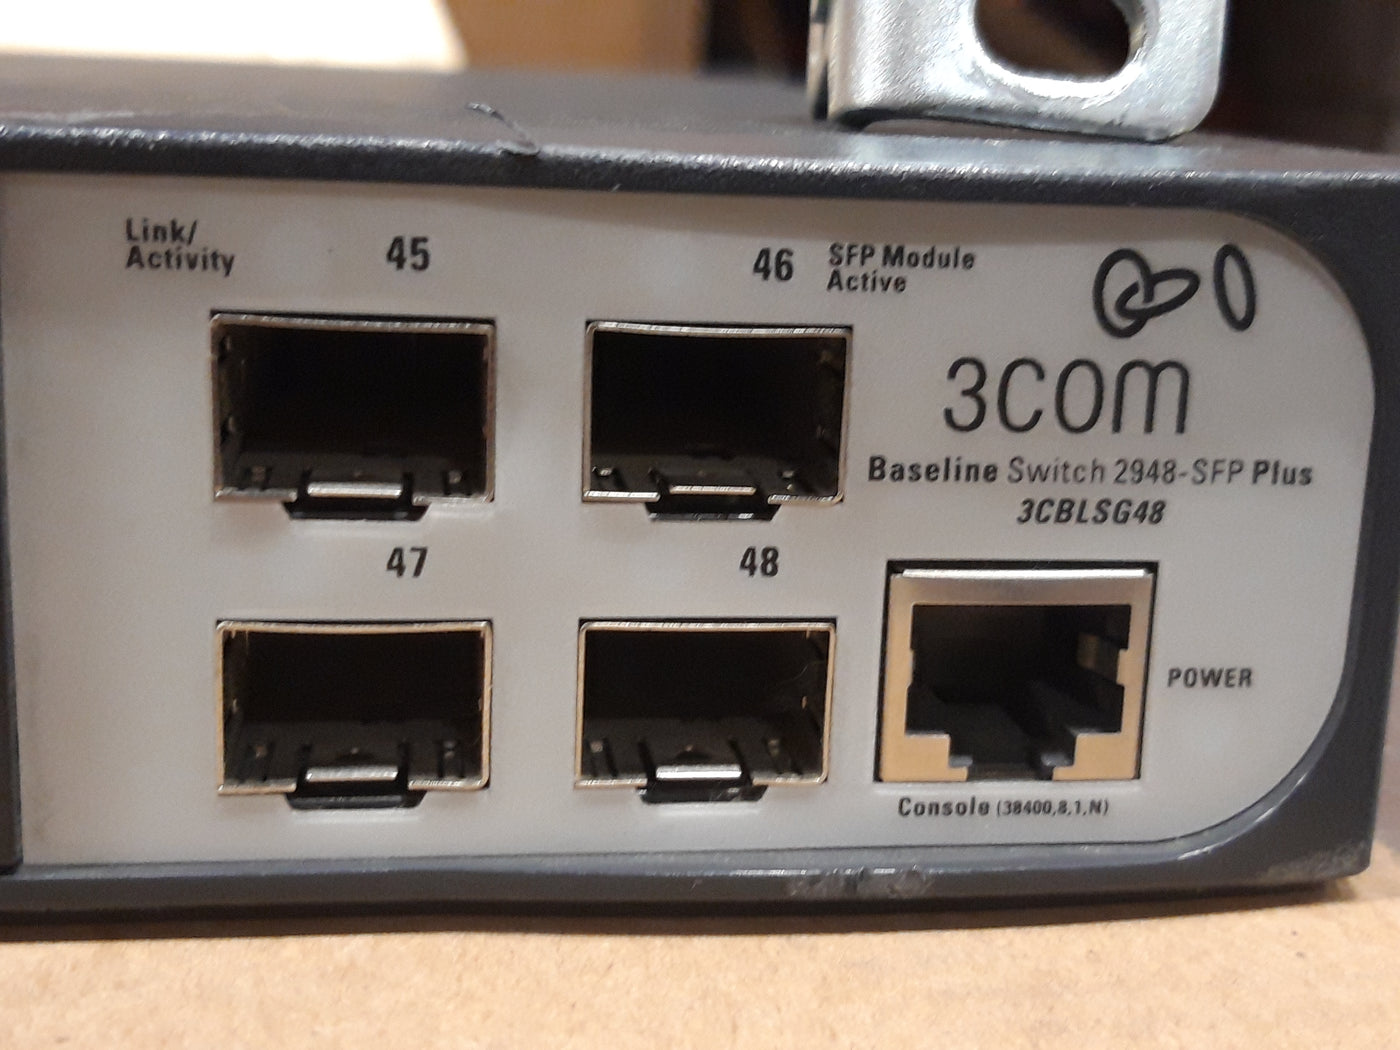 3COM Baseline Switch 2948-SFP Plus - 3CBLSG48 - 48 Port Switch (10015726 Used)